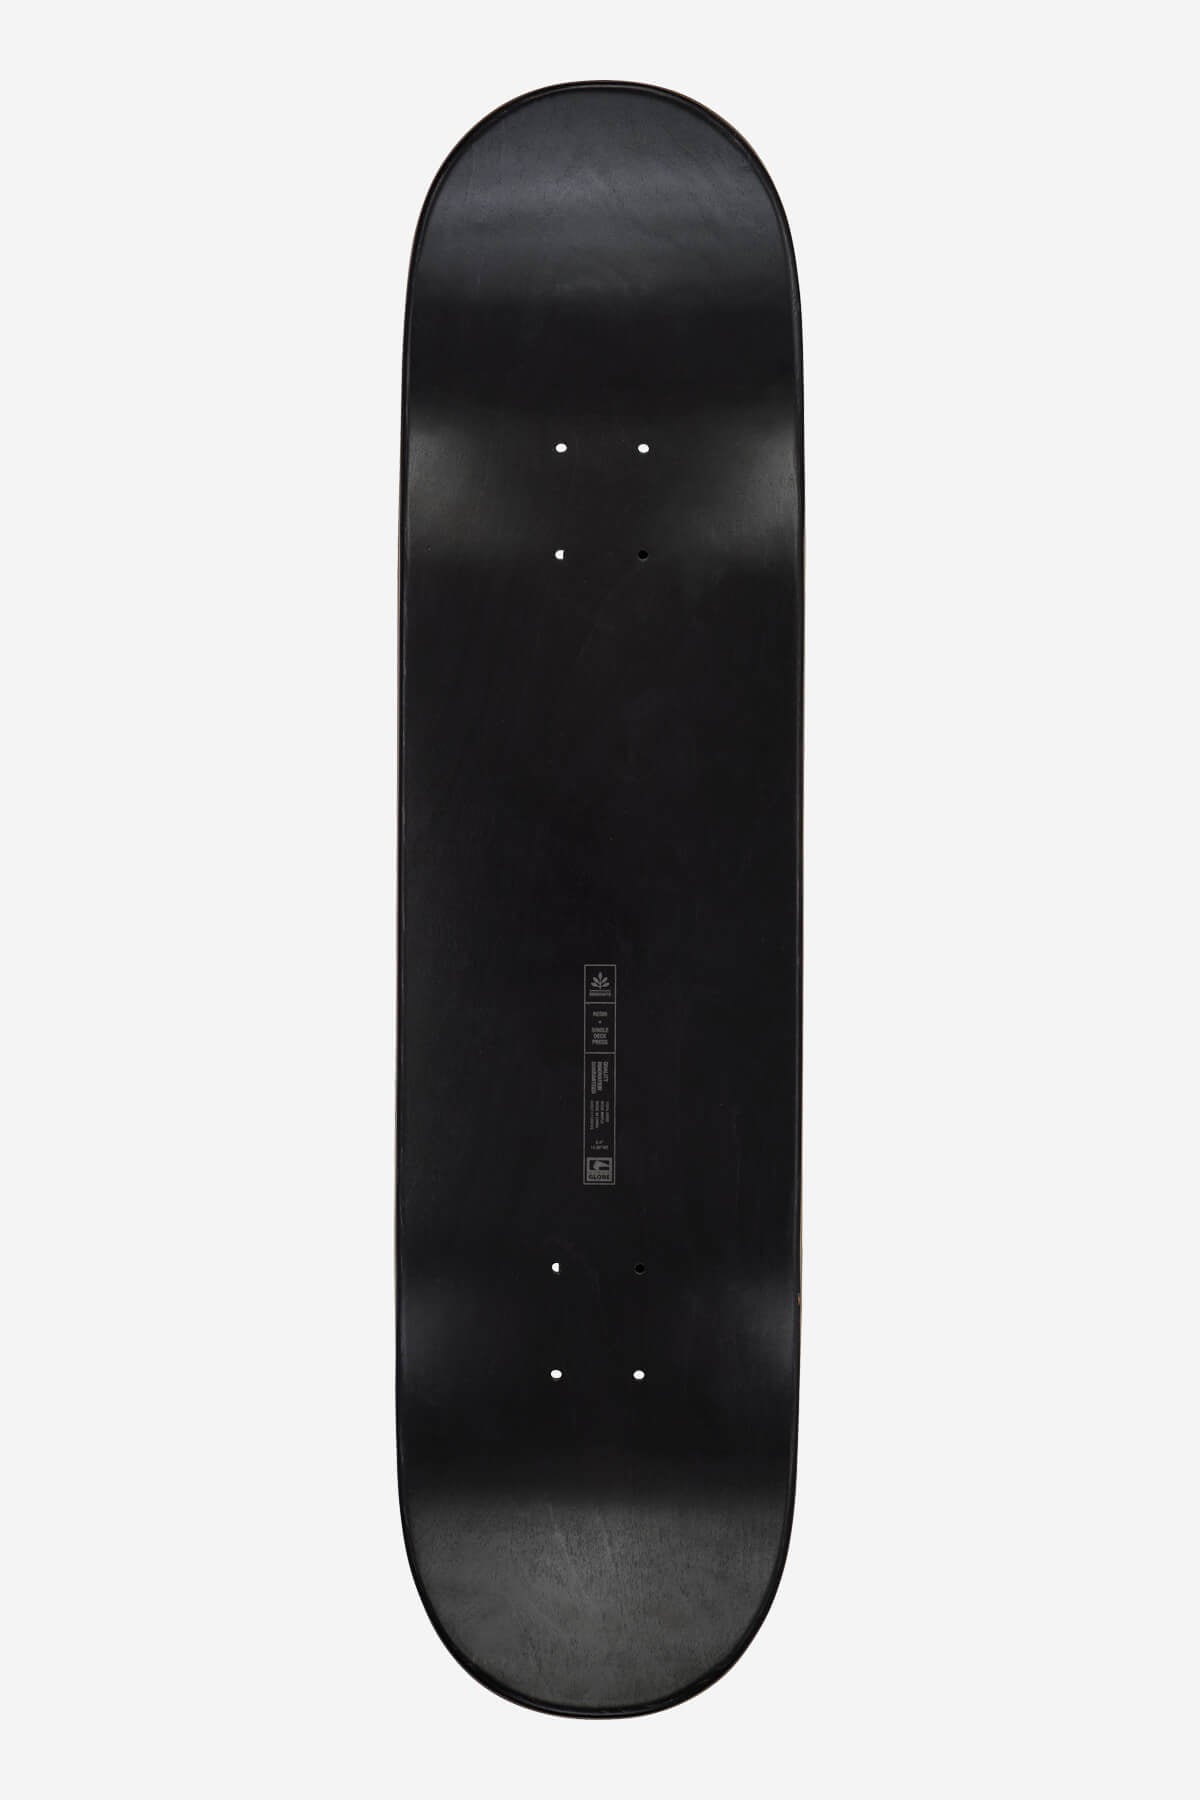 Globe - G1 Lineform 2 - Off White - 8.0" Skateboard Deck